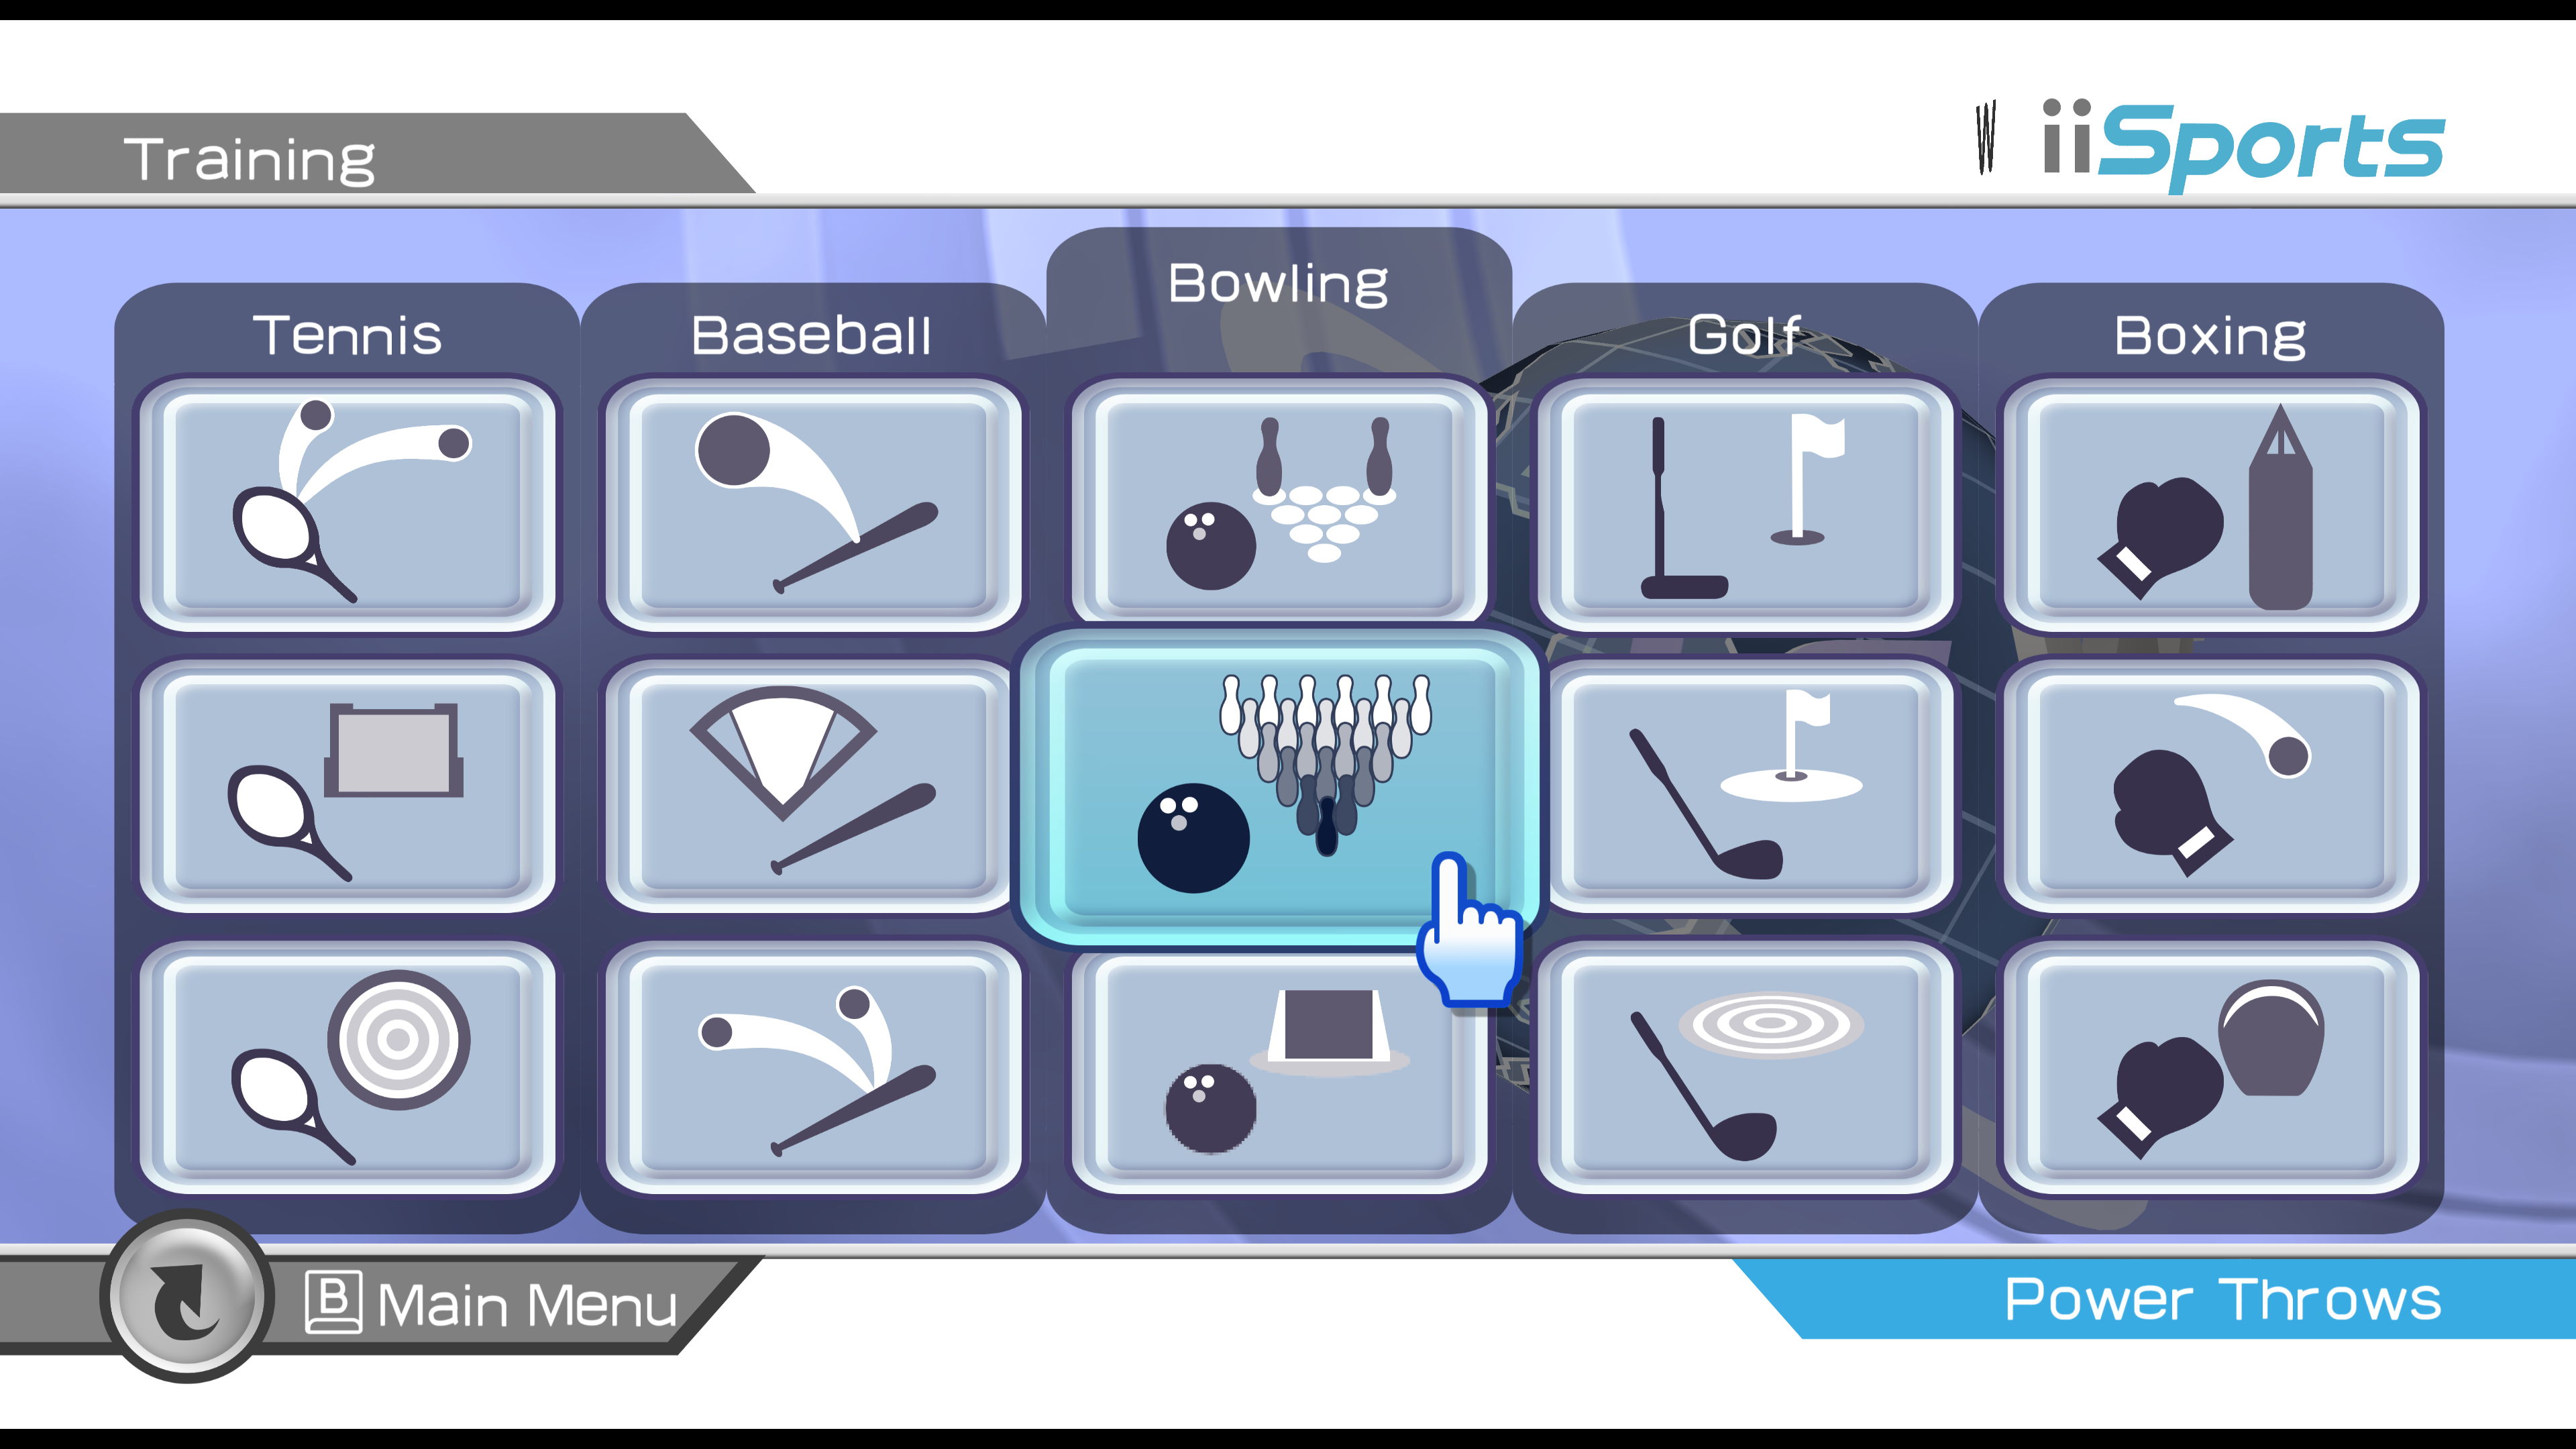 wii sports resort emulator mac bowling